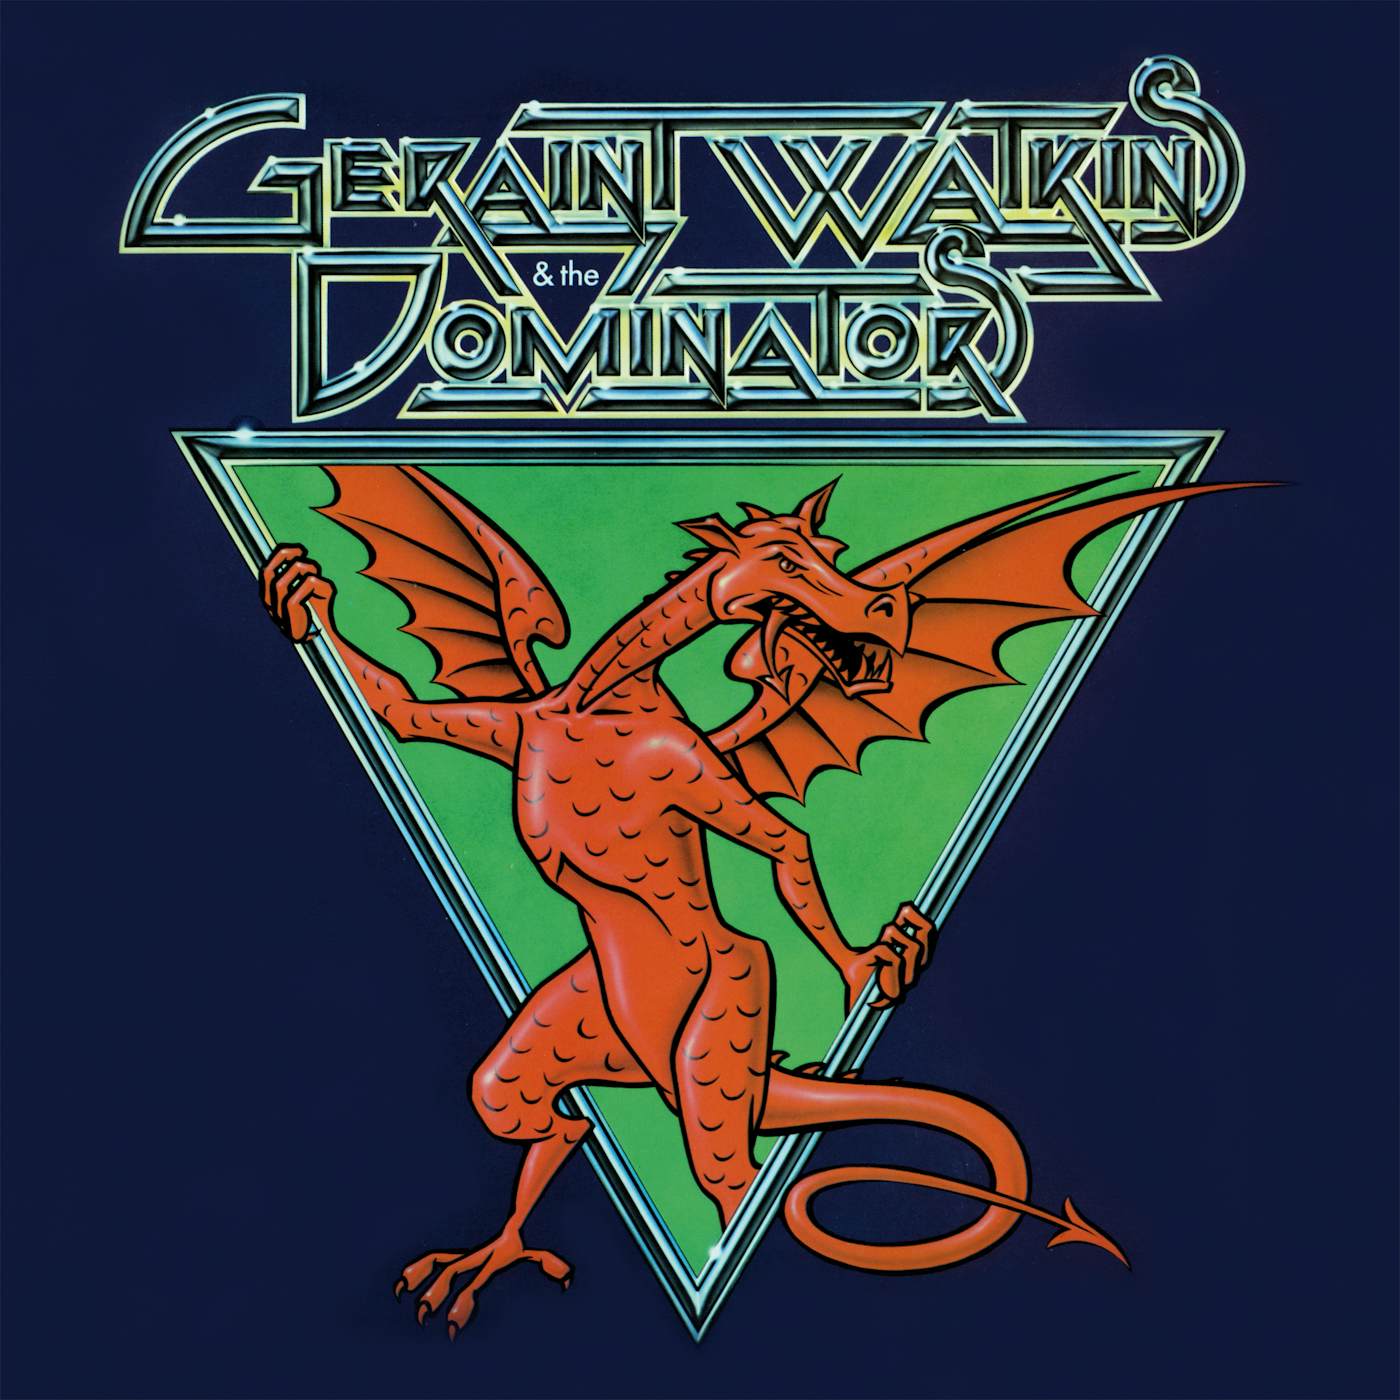 Geraint Watkins & Dominators Vinyl Record